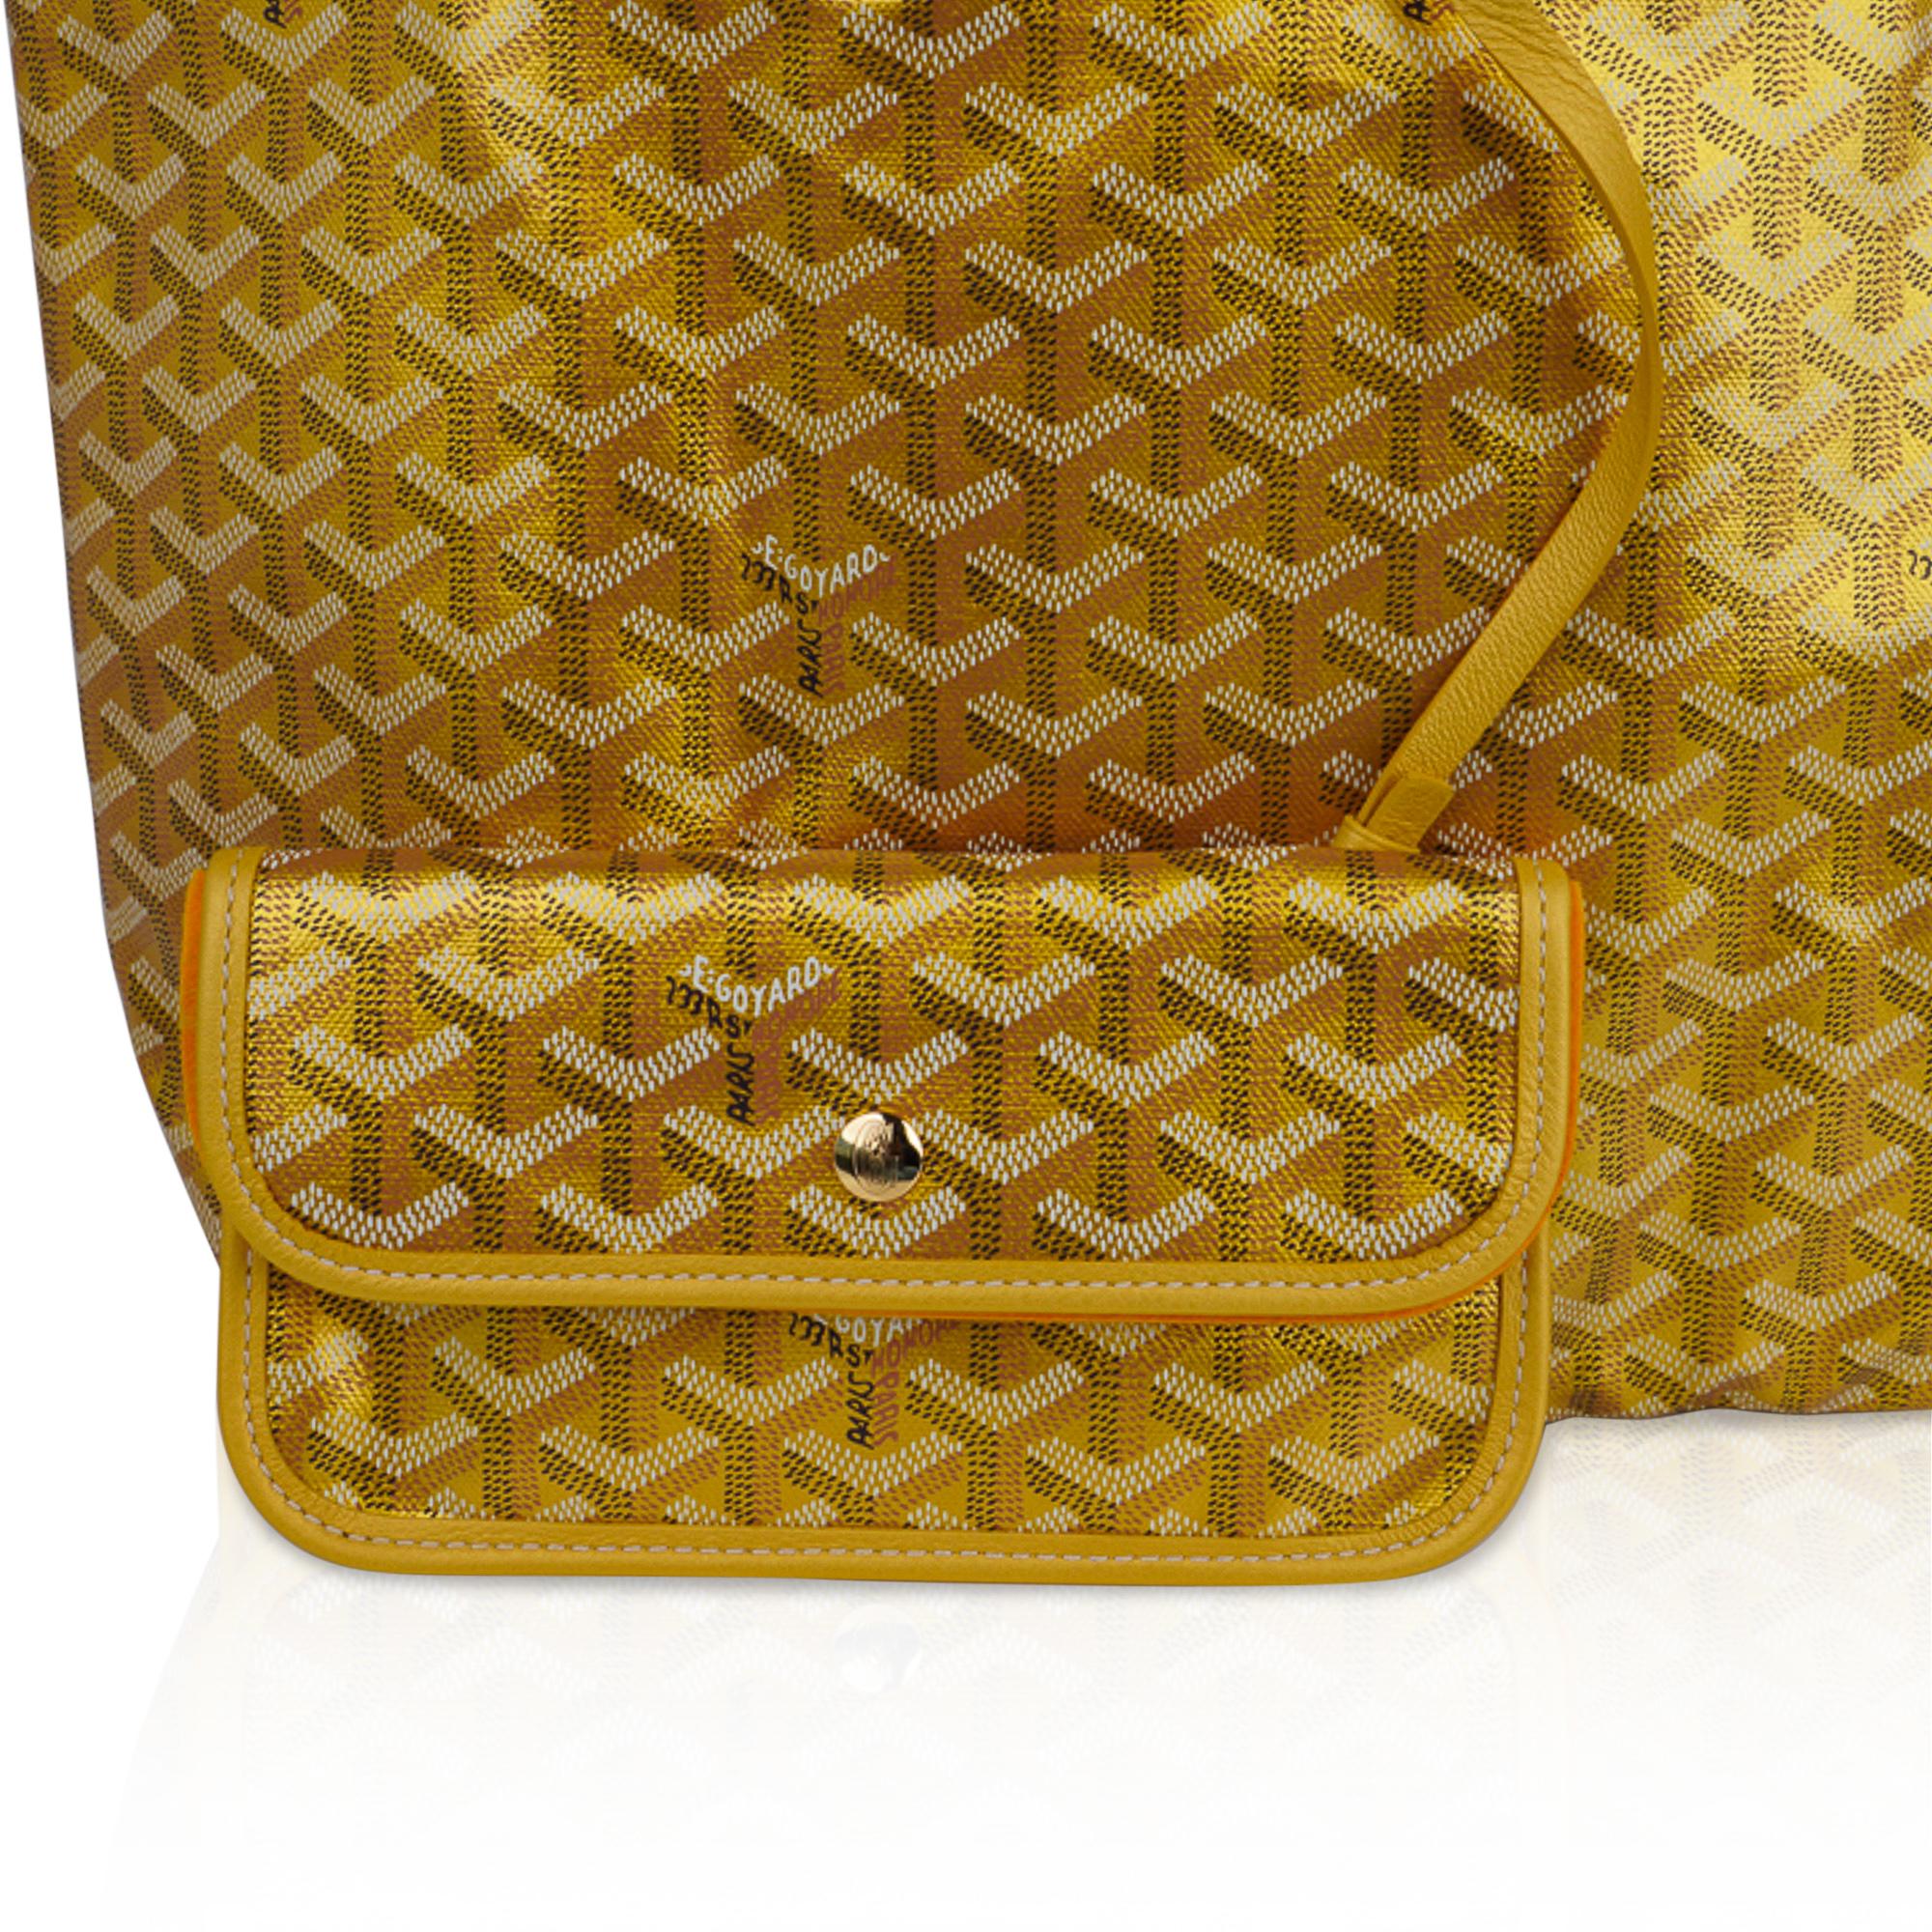 Goyard Saint Louis Metallic Gold PM Tote Bag Limited Edition 2021 New w/Tag 5